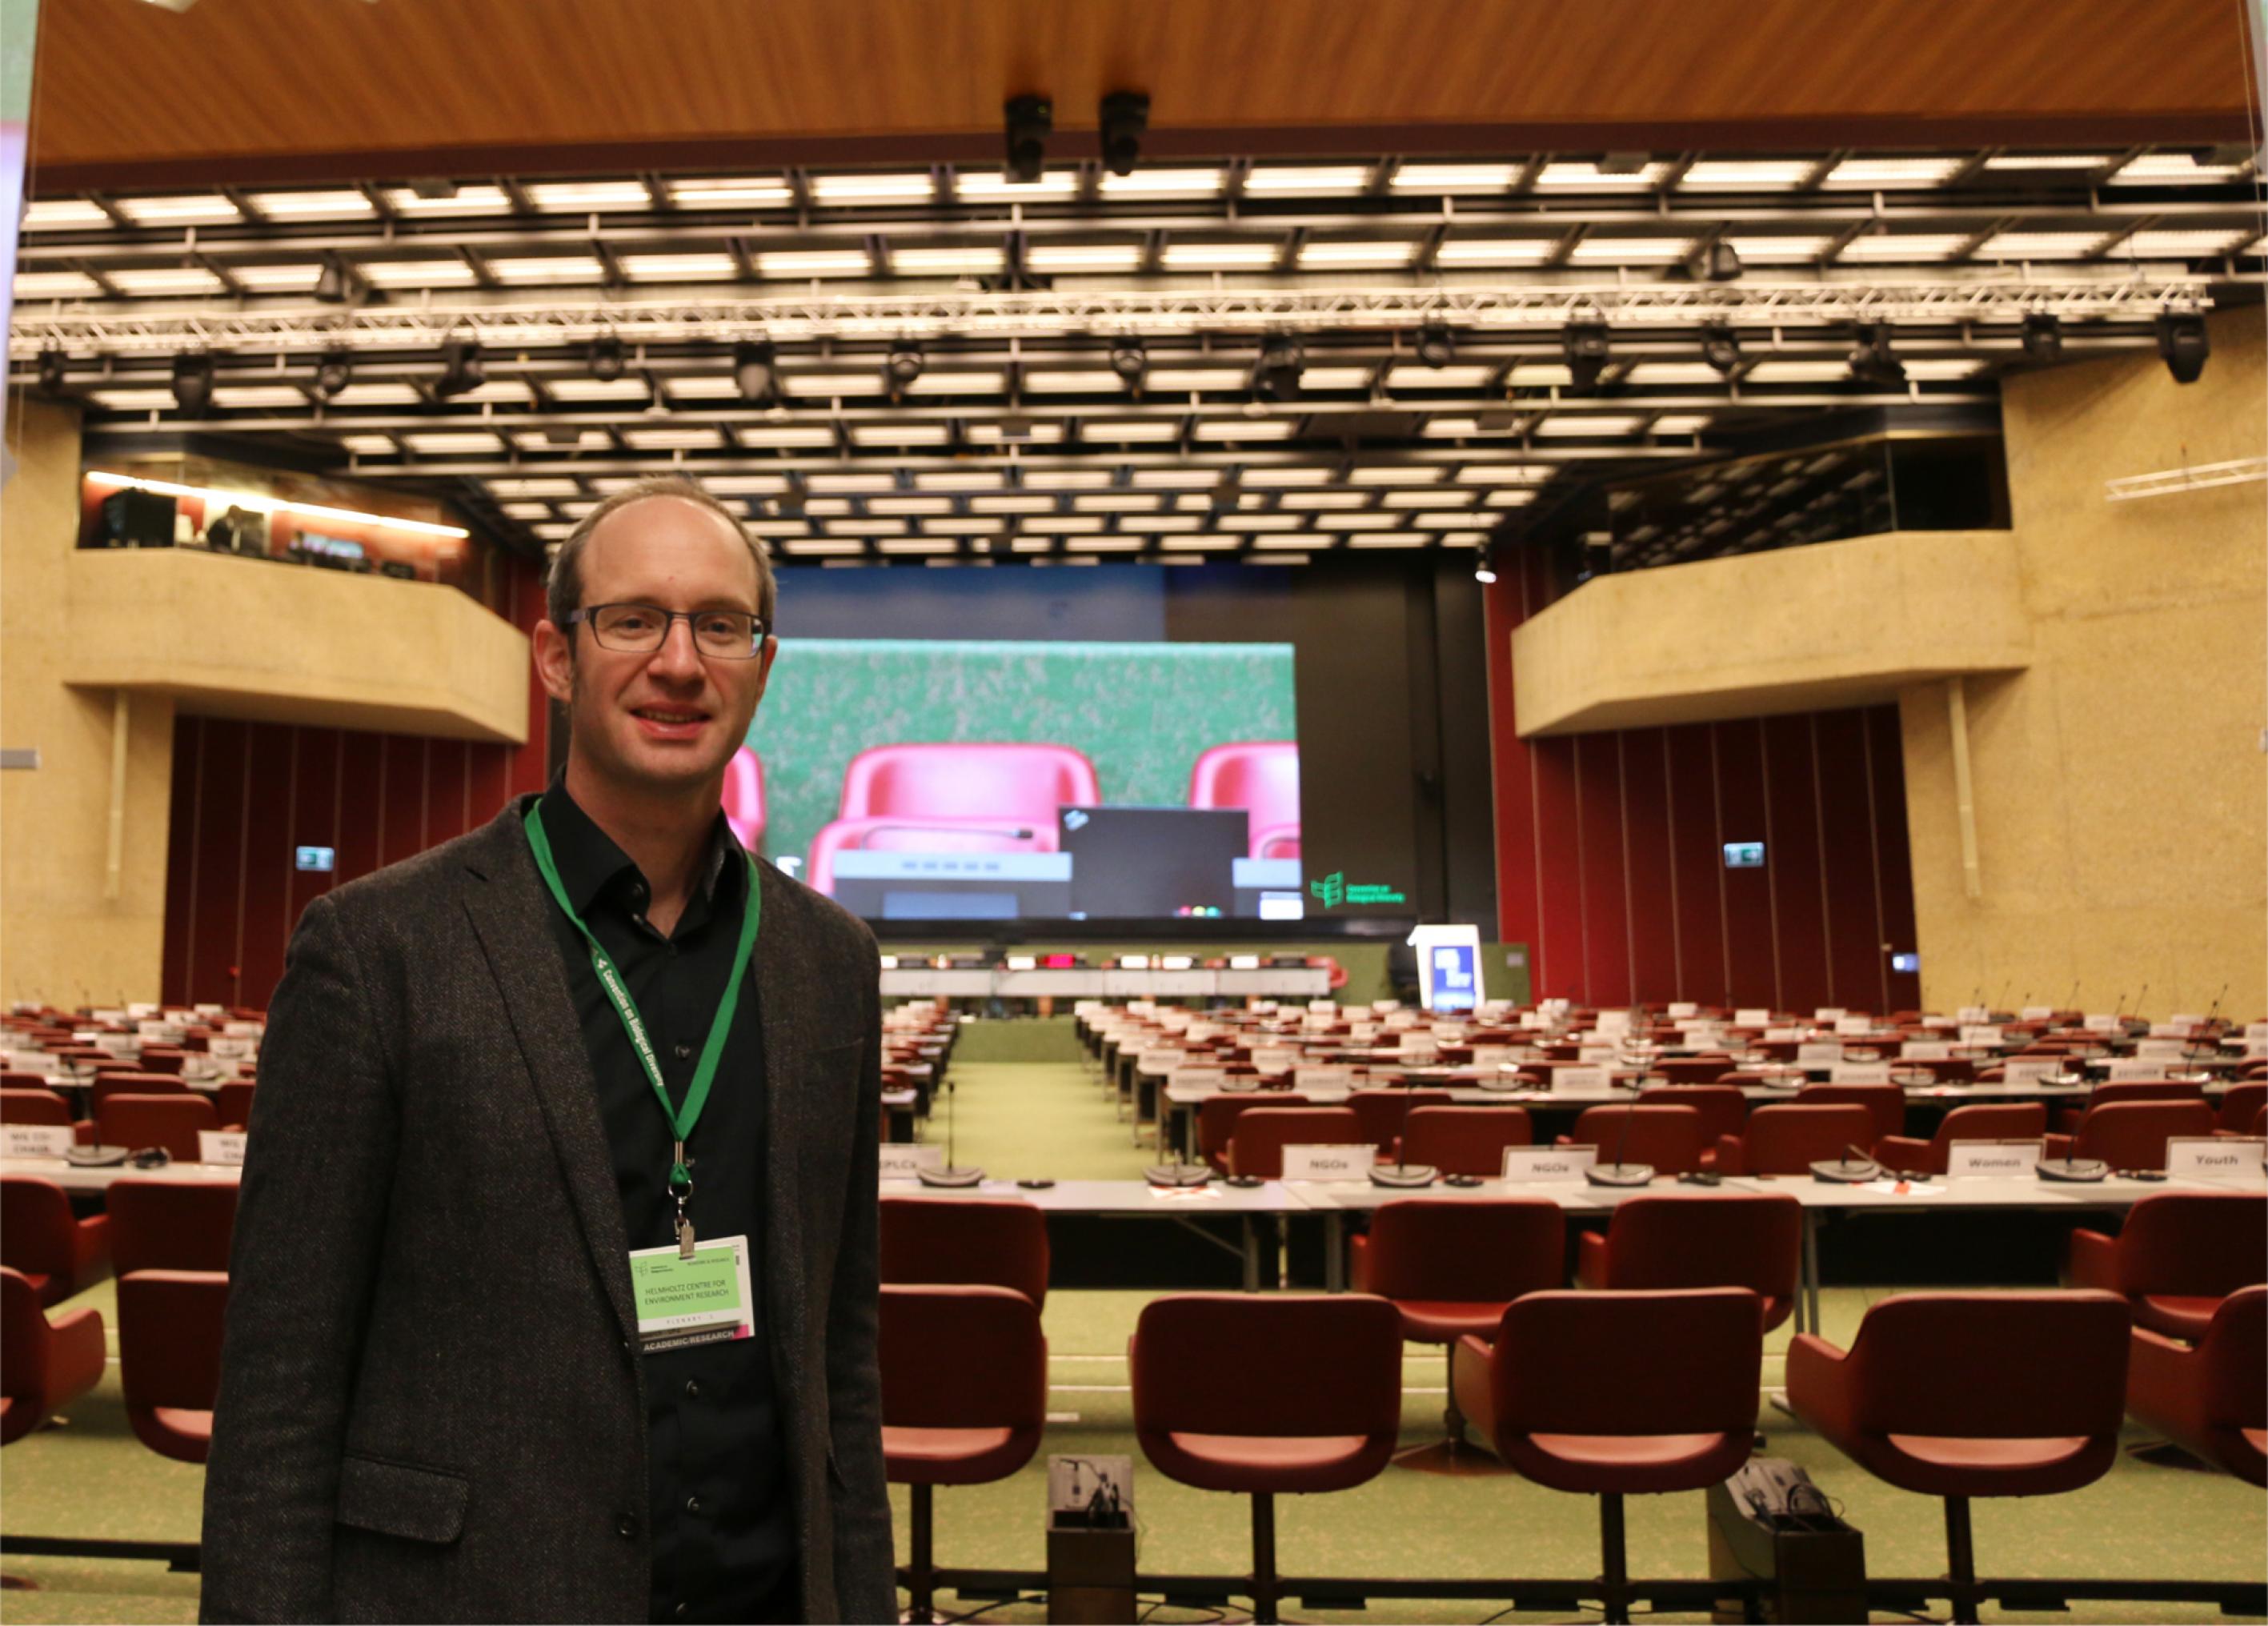 Yves Zinngrebe steht im leeren Konferenzsaal